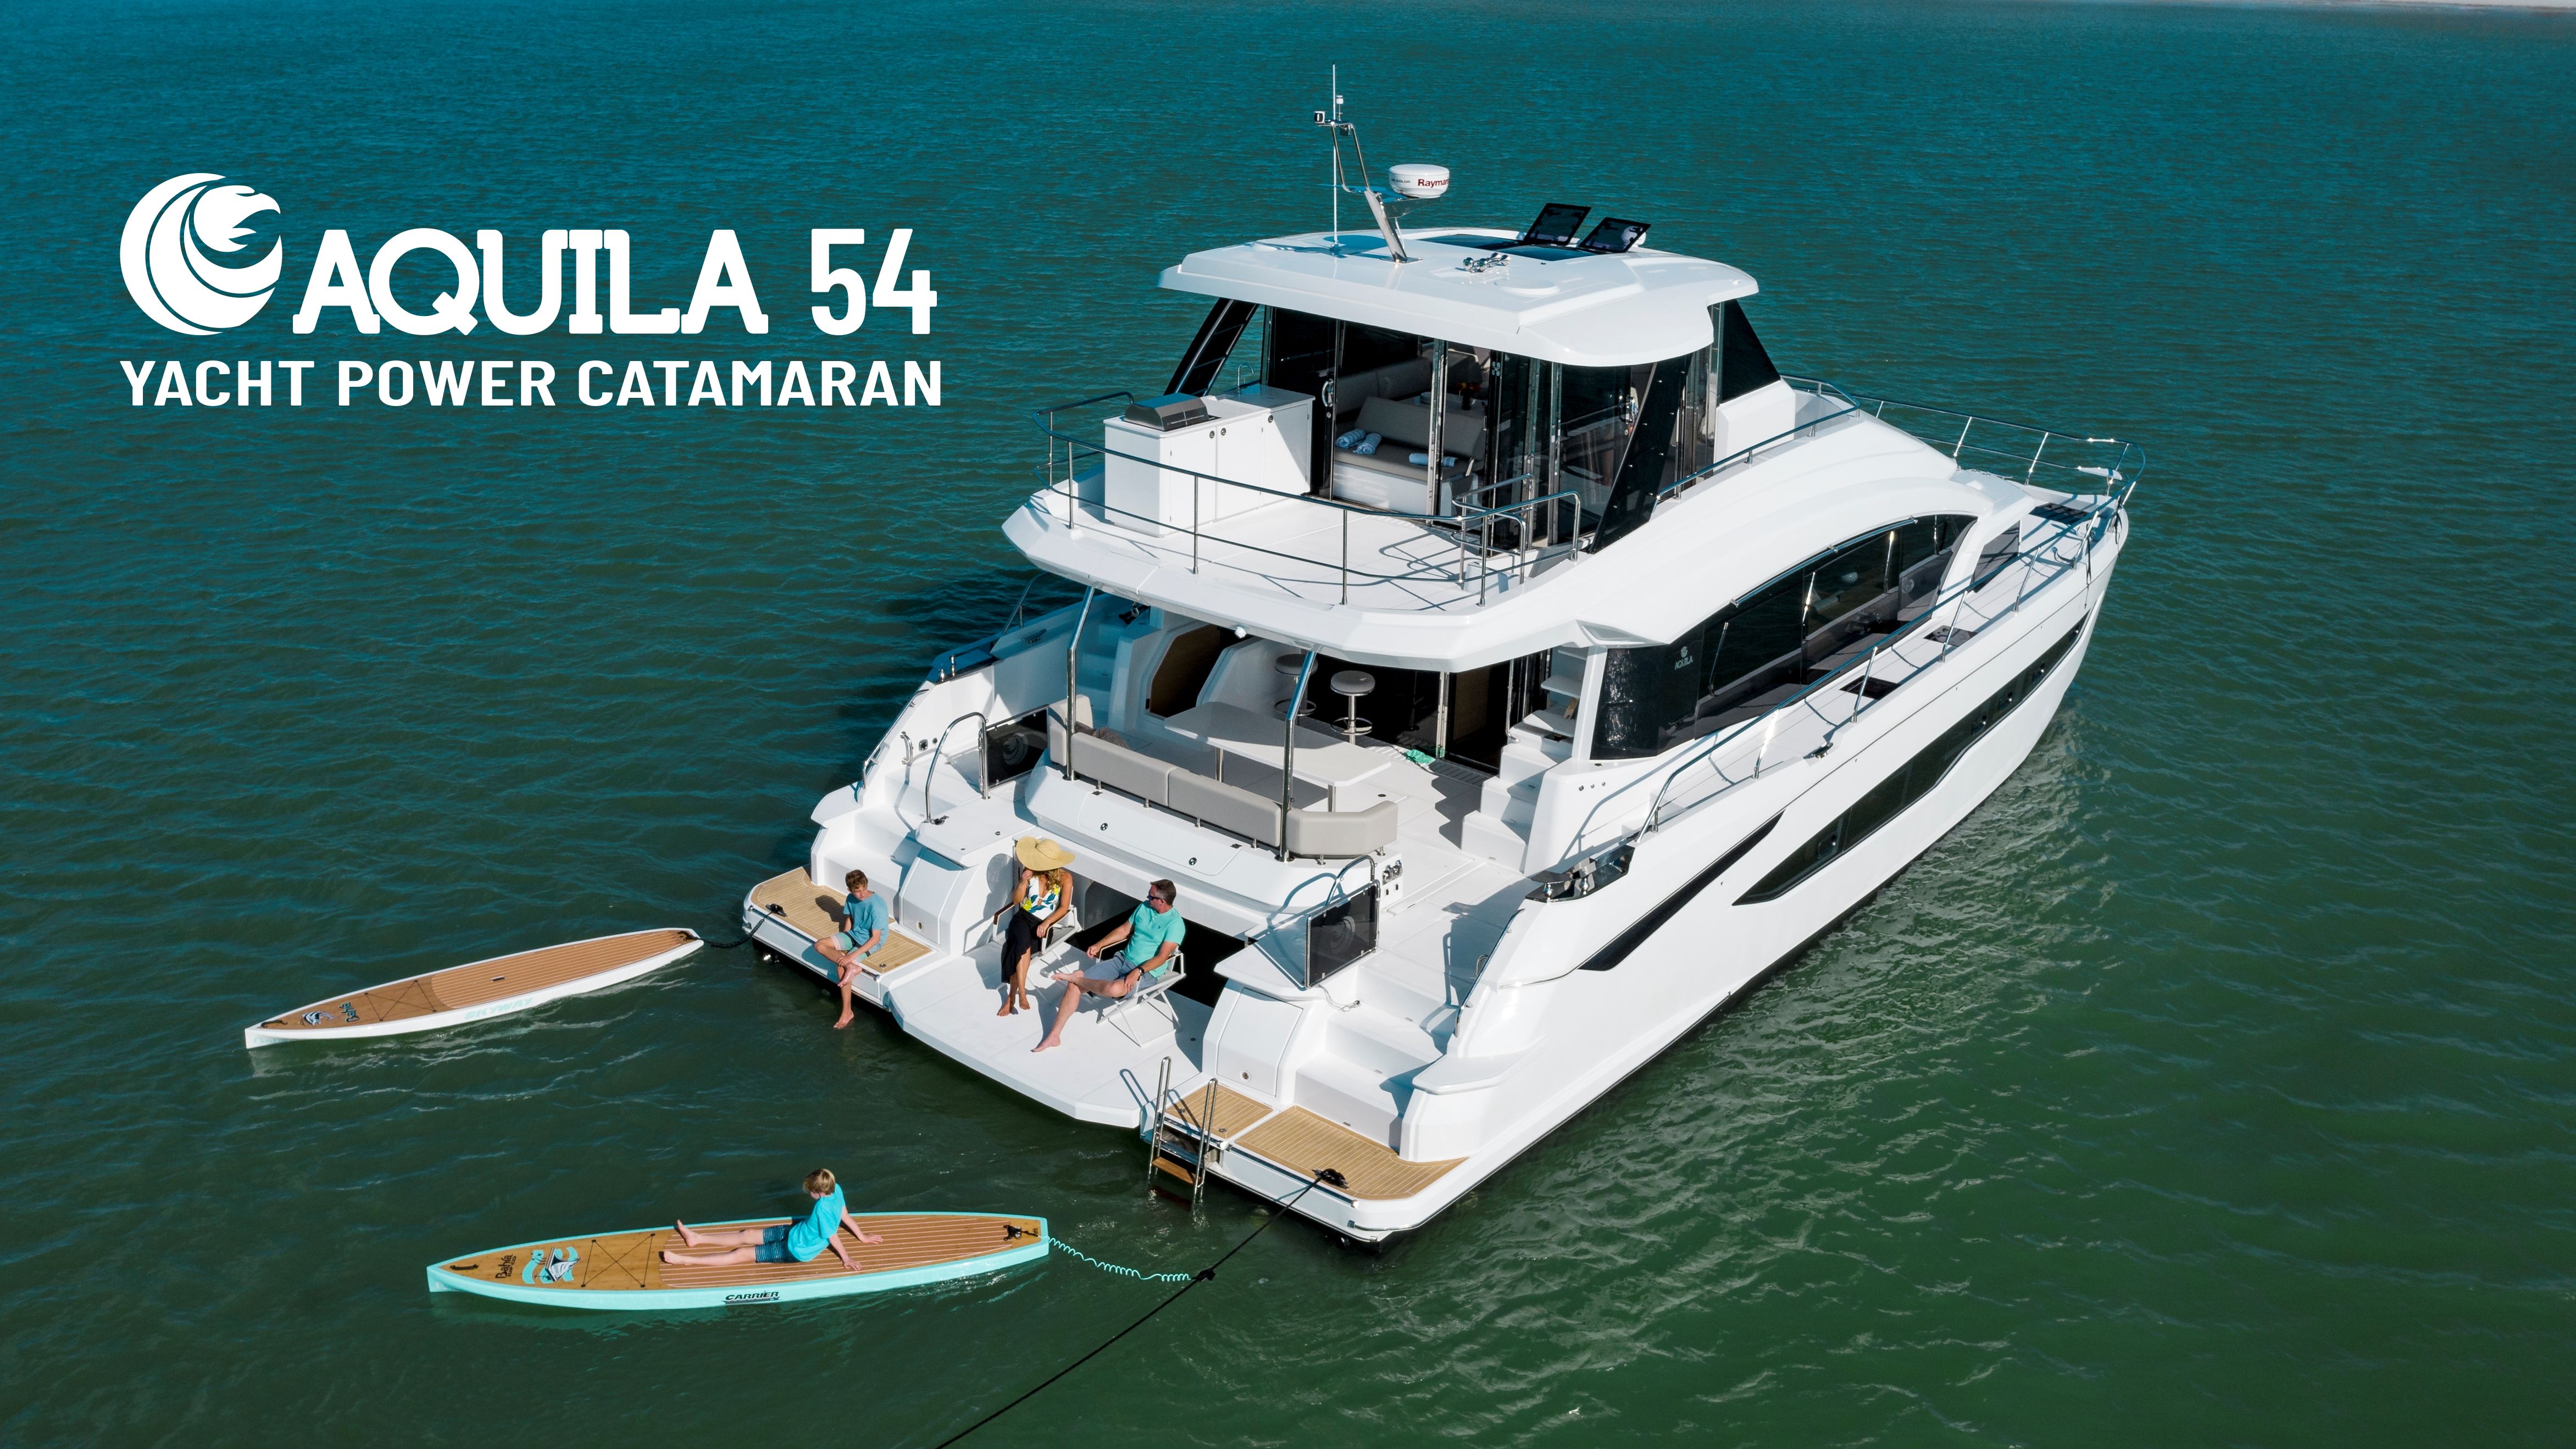 Aquila 54 Yacht Power Catamaran - Yürüyüş Turu